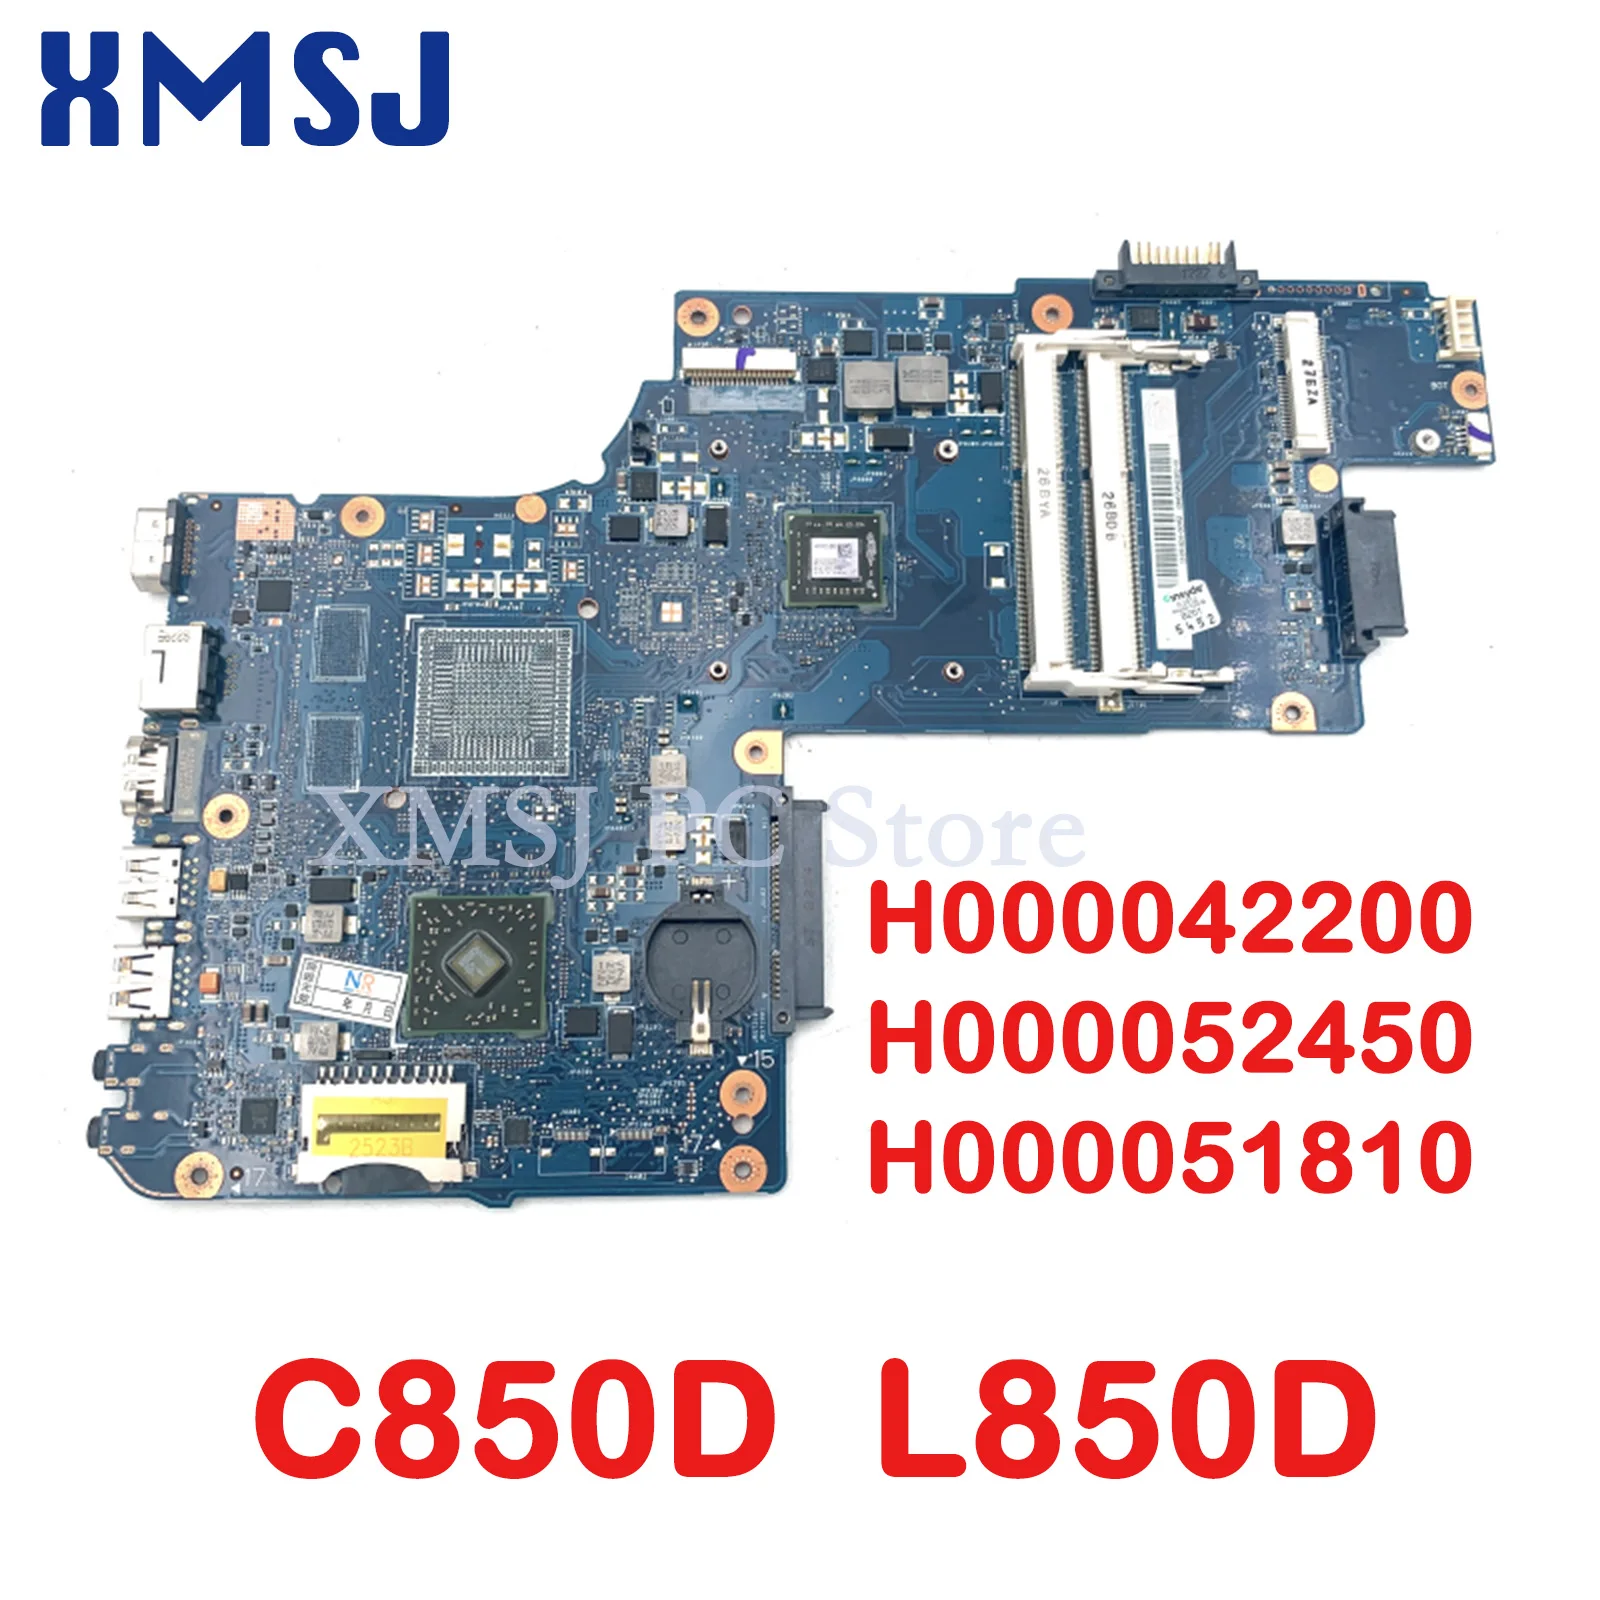 XMSJ H000042200 H000052450 H000051810 Laptop Motherboard for Toshiba Satellite C850D L850D REV 2.1 DDR3 Main Board